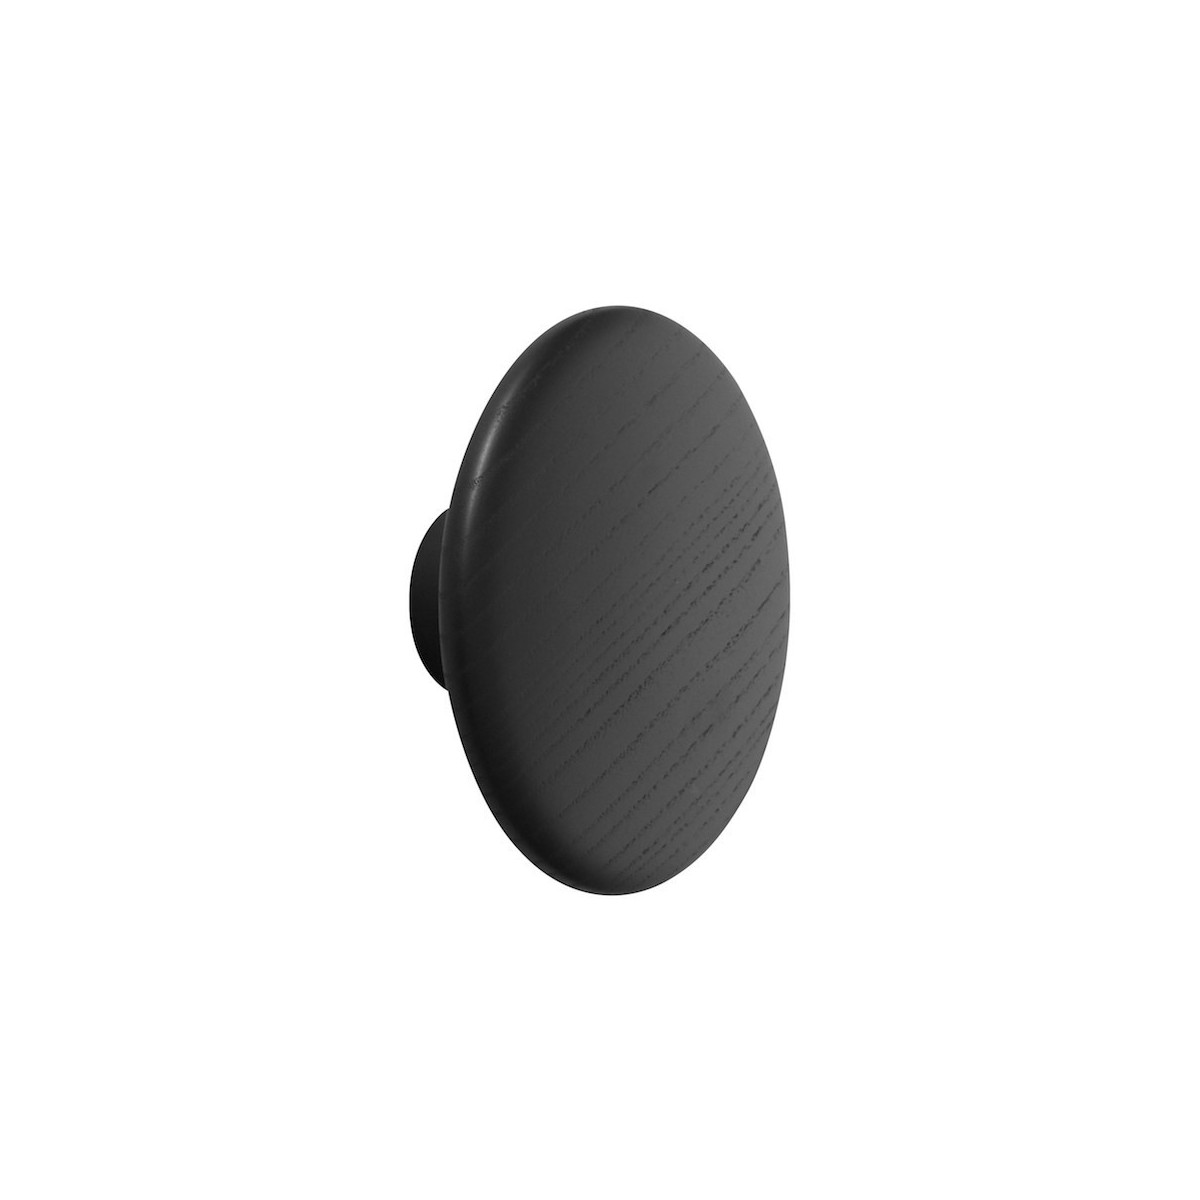 Ø9 cm (S) - black - The Dots wood